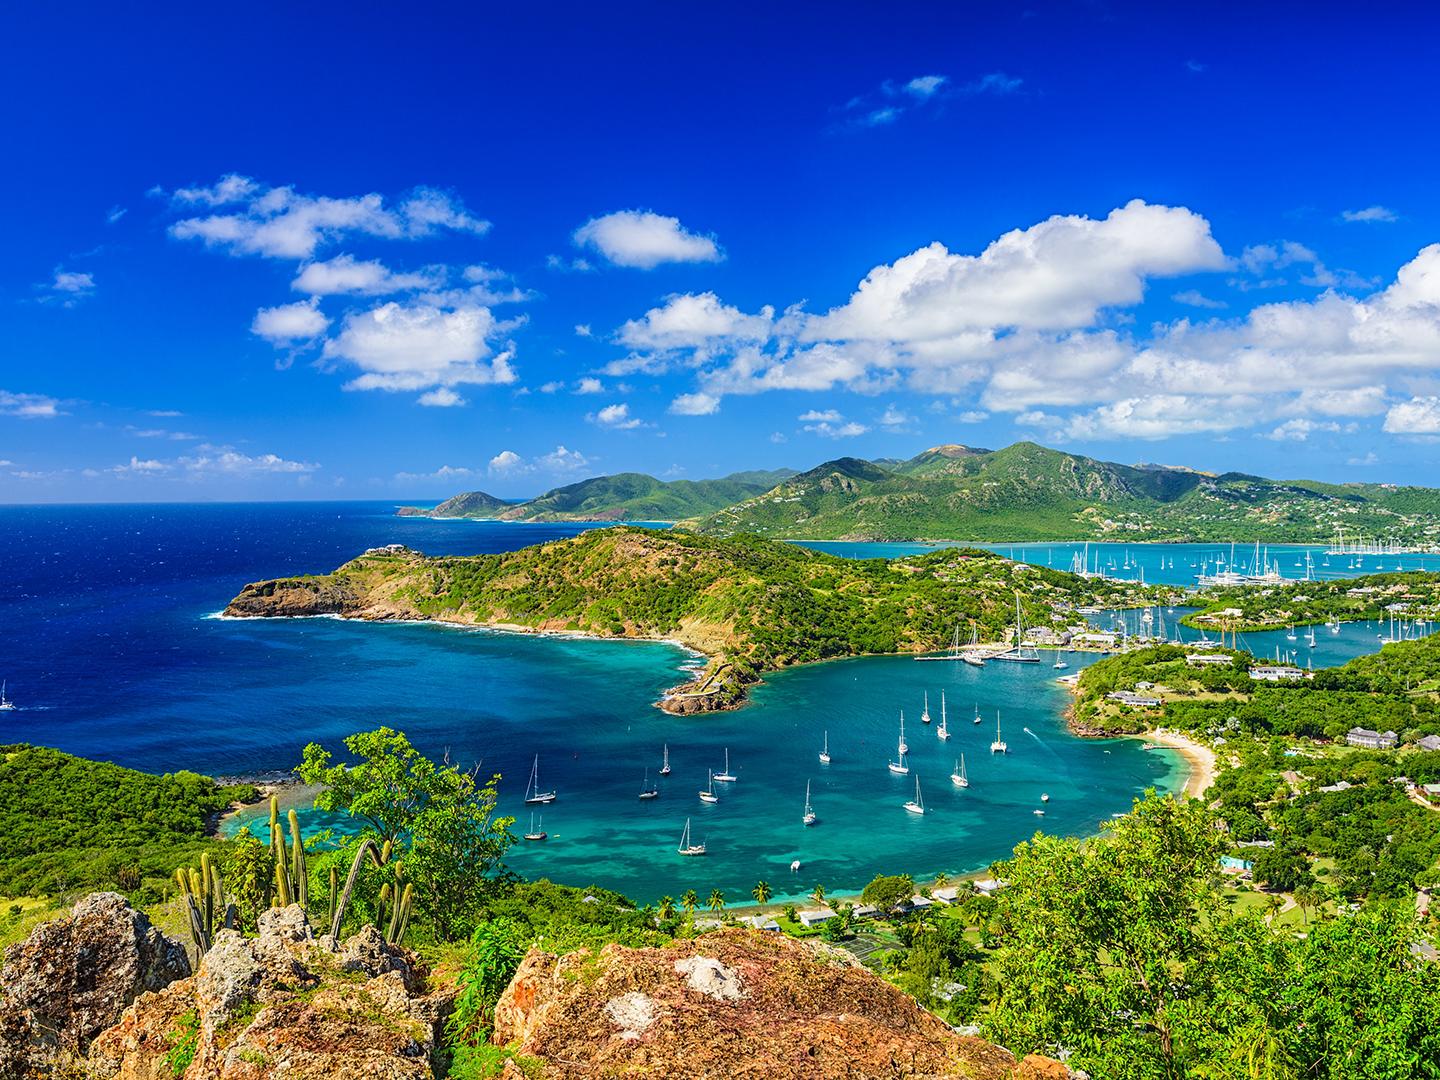 Royal Caribbean CEO part of task force to safe return of tourism to the Caribbean | Royal Caribbean Blog